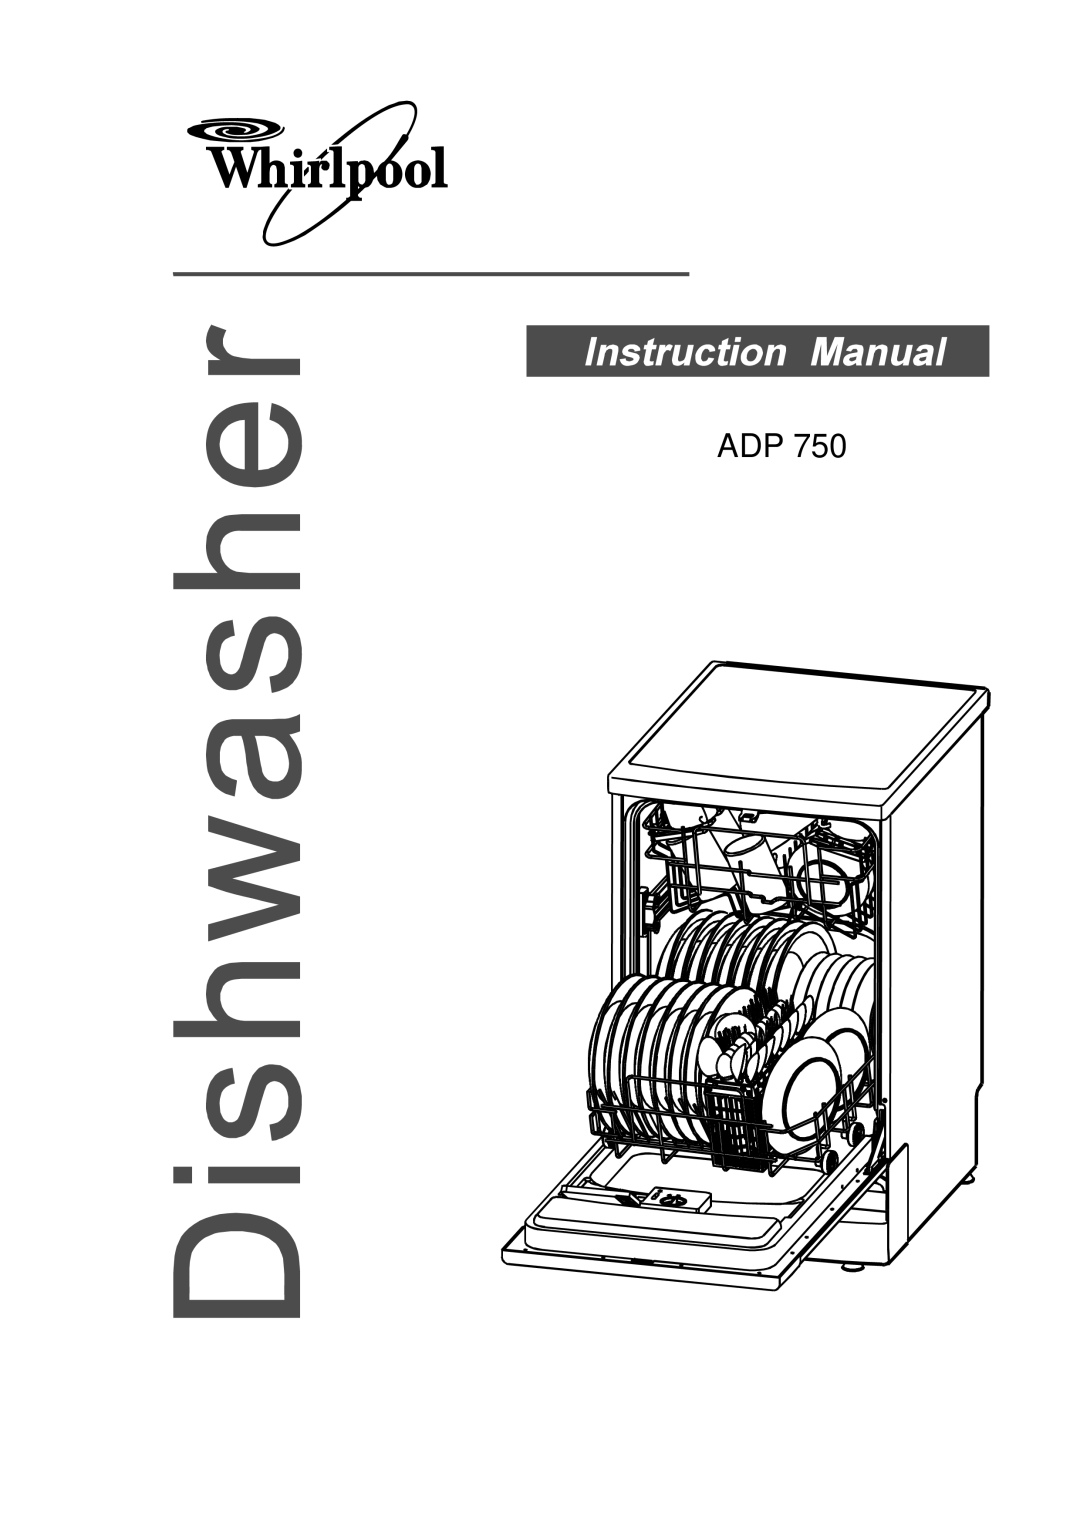 Whirlpool ADP 750 manual 